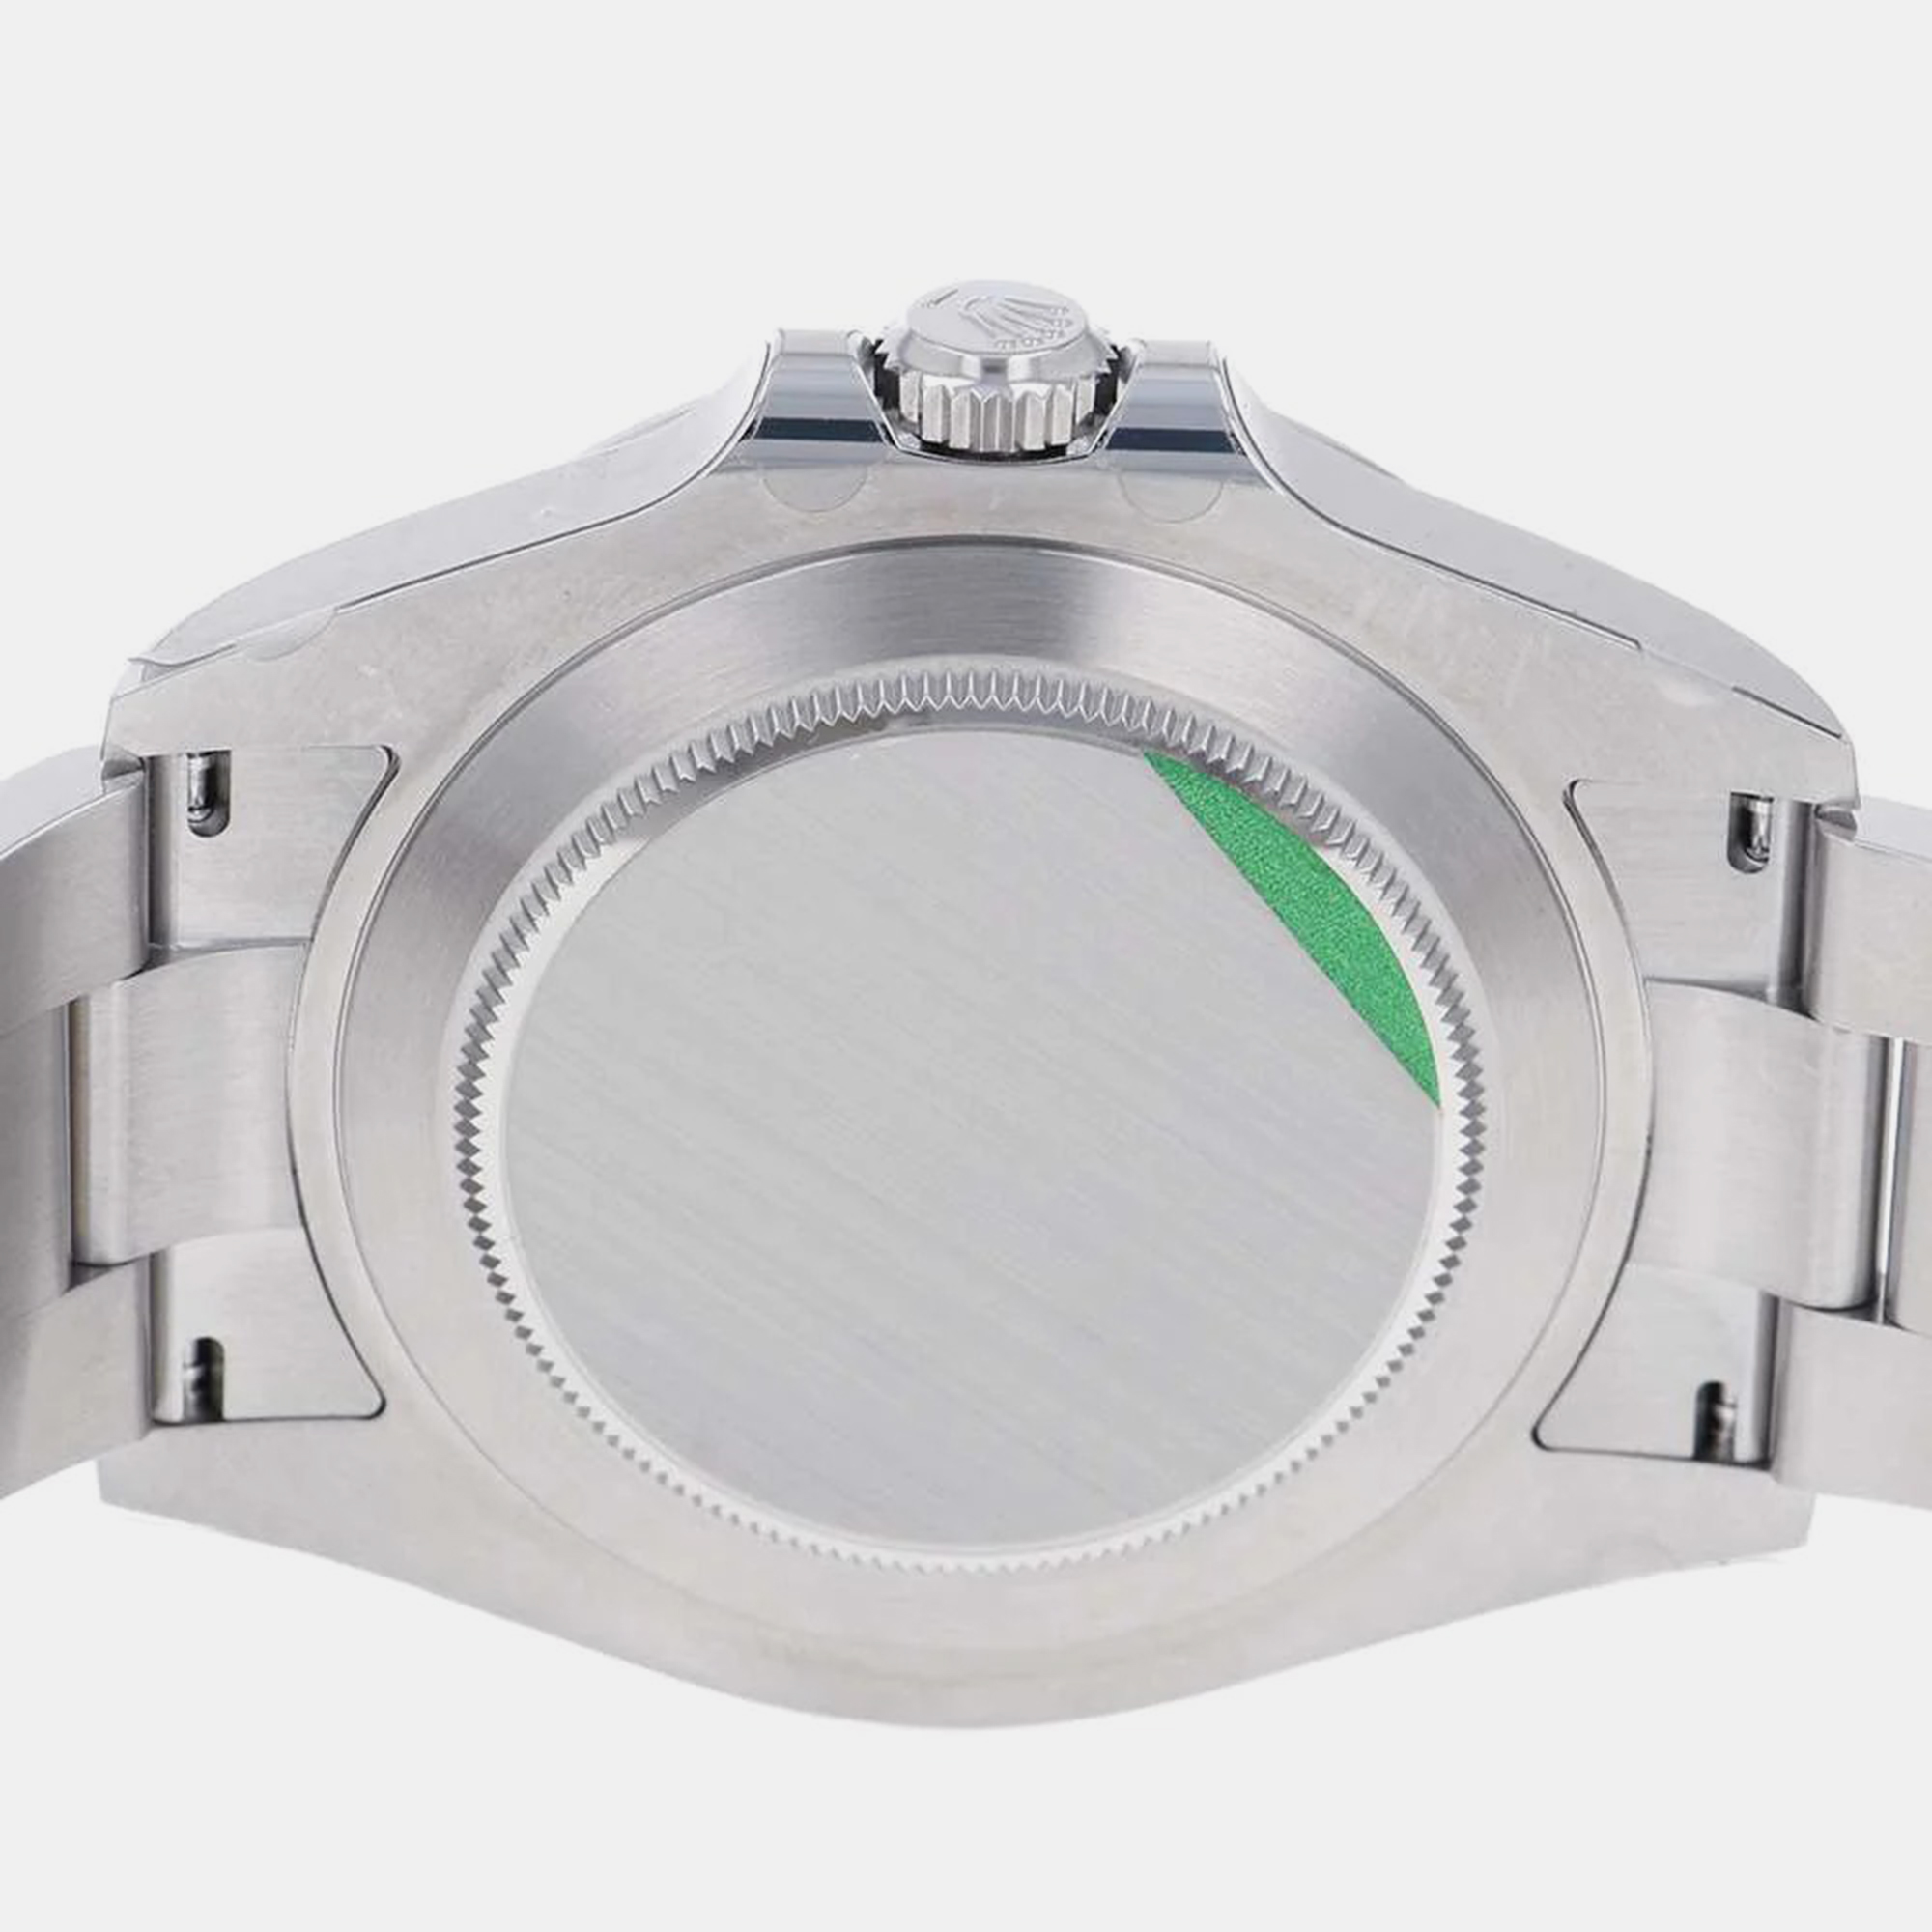 Rolex White Stainless Steel Explorer II 226570 Automatic Men's Wristwatch 42 Mm